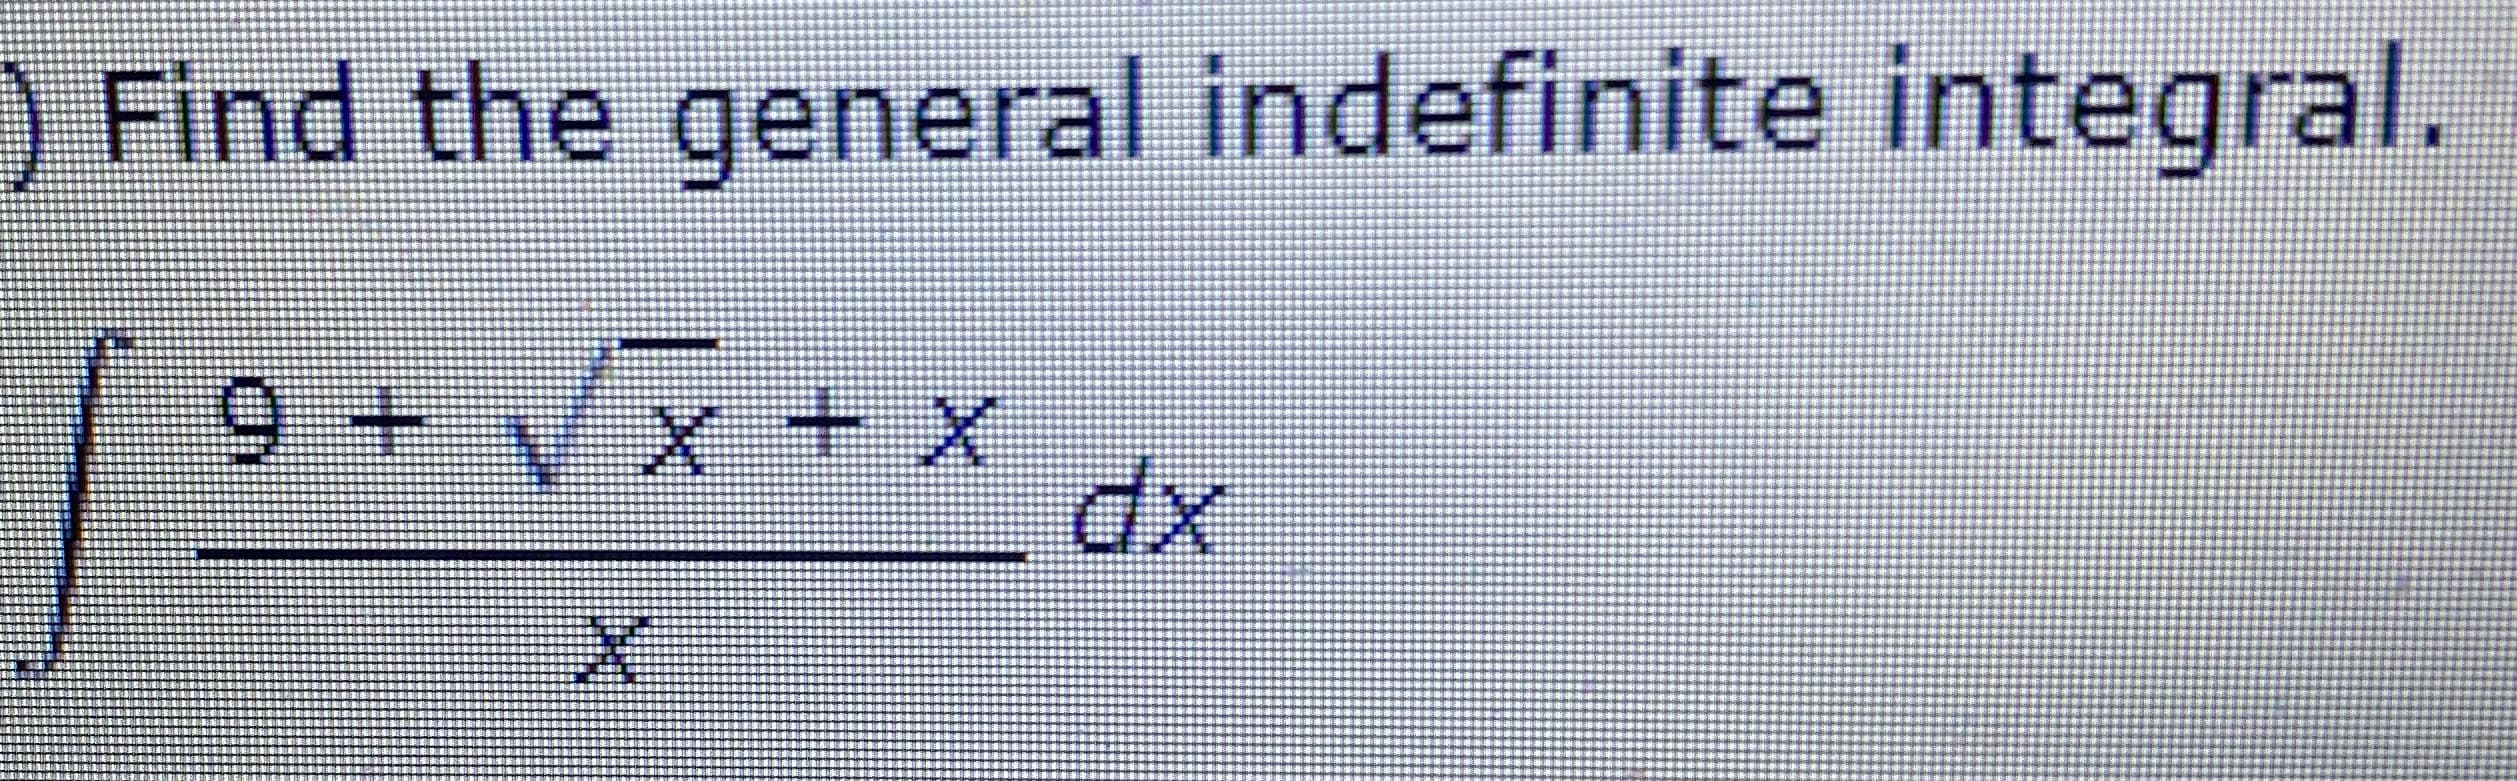 ) Find the general indefinite integral.
9 +Vx + x
xp
